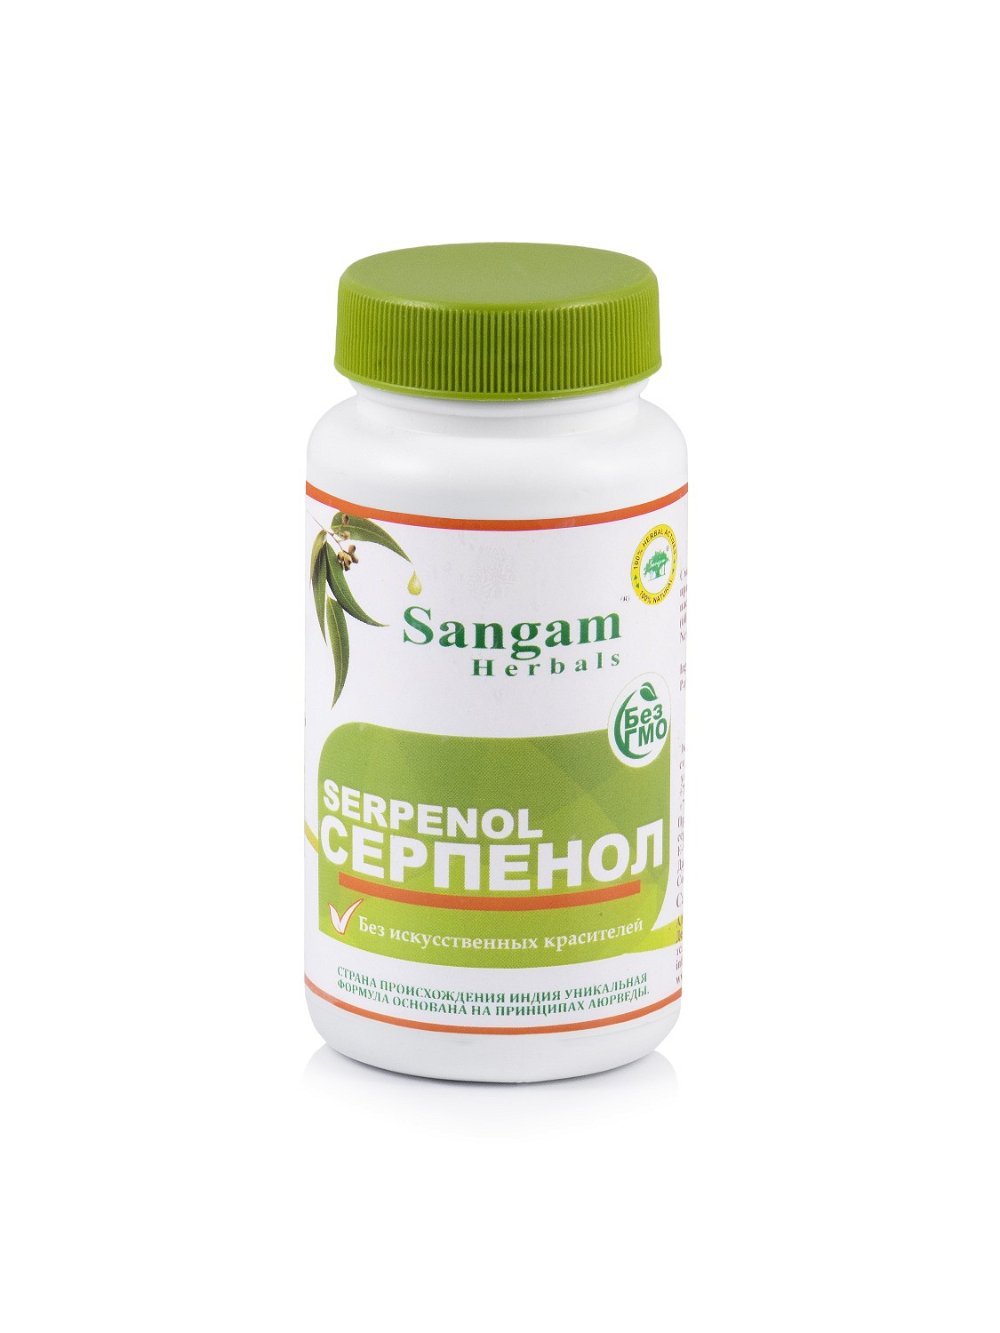 Серпенол Sangam Herbals (60 таблеток), 